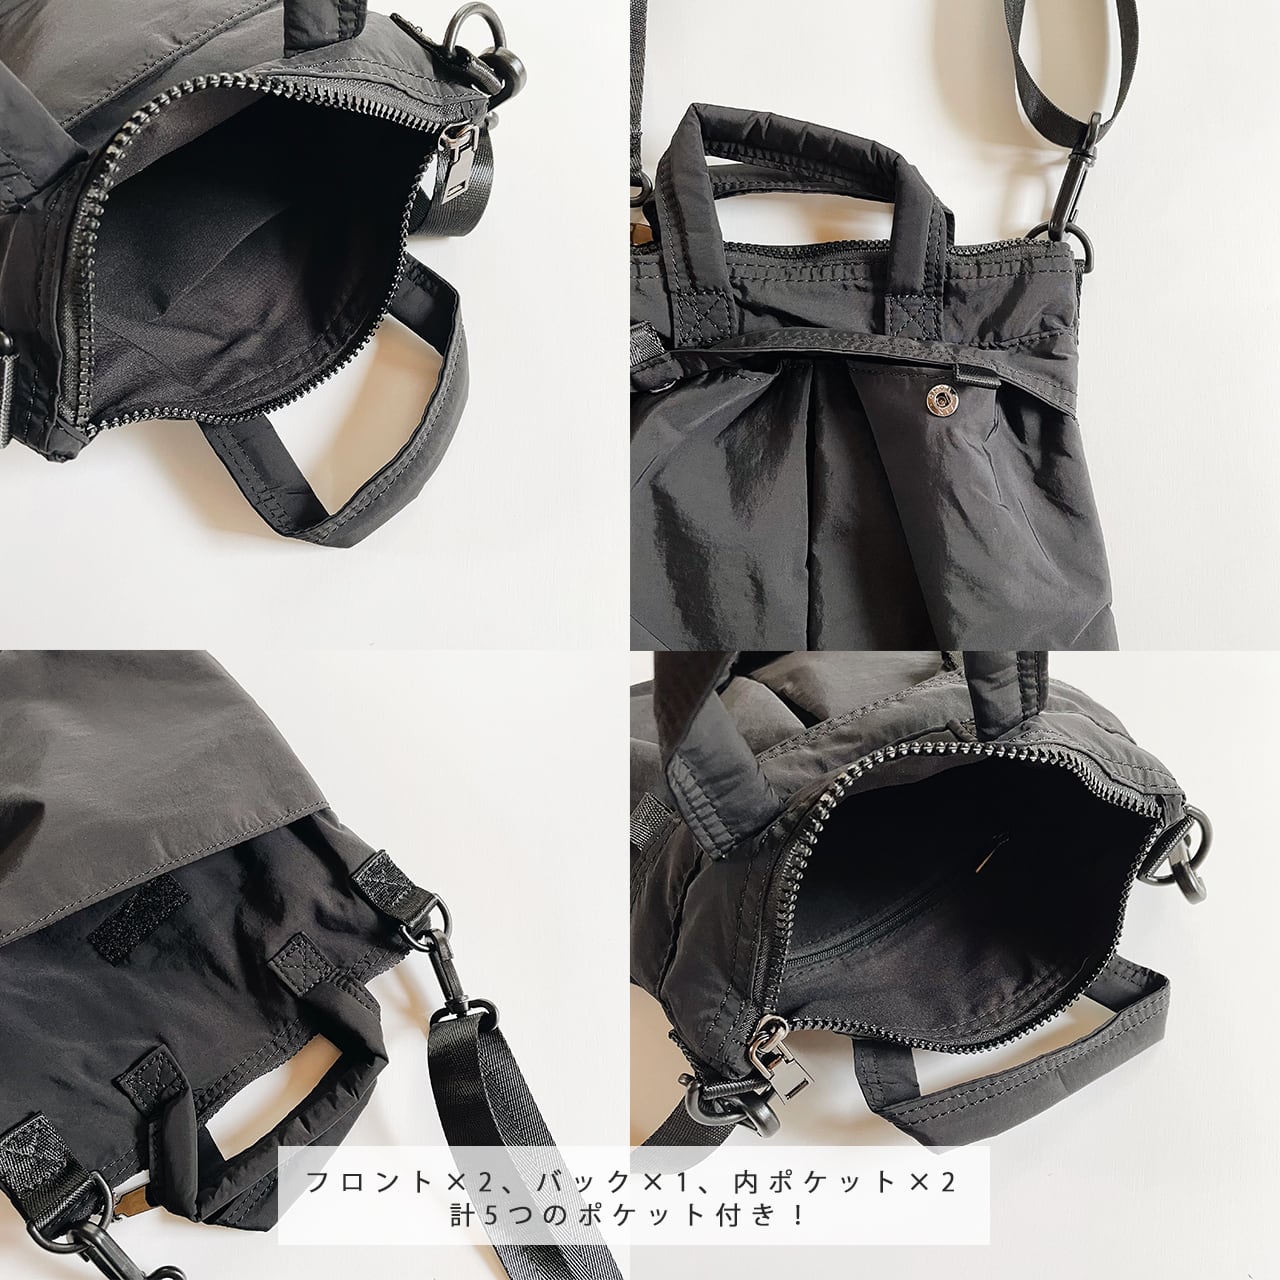 Multi bag with pockets (black)